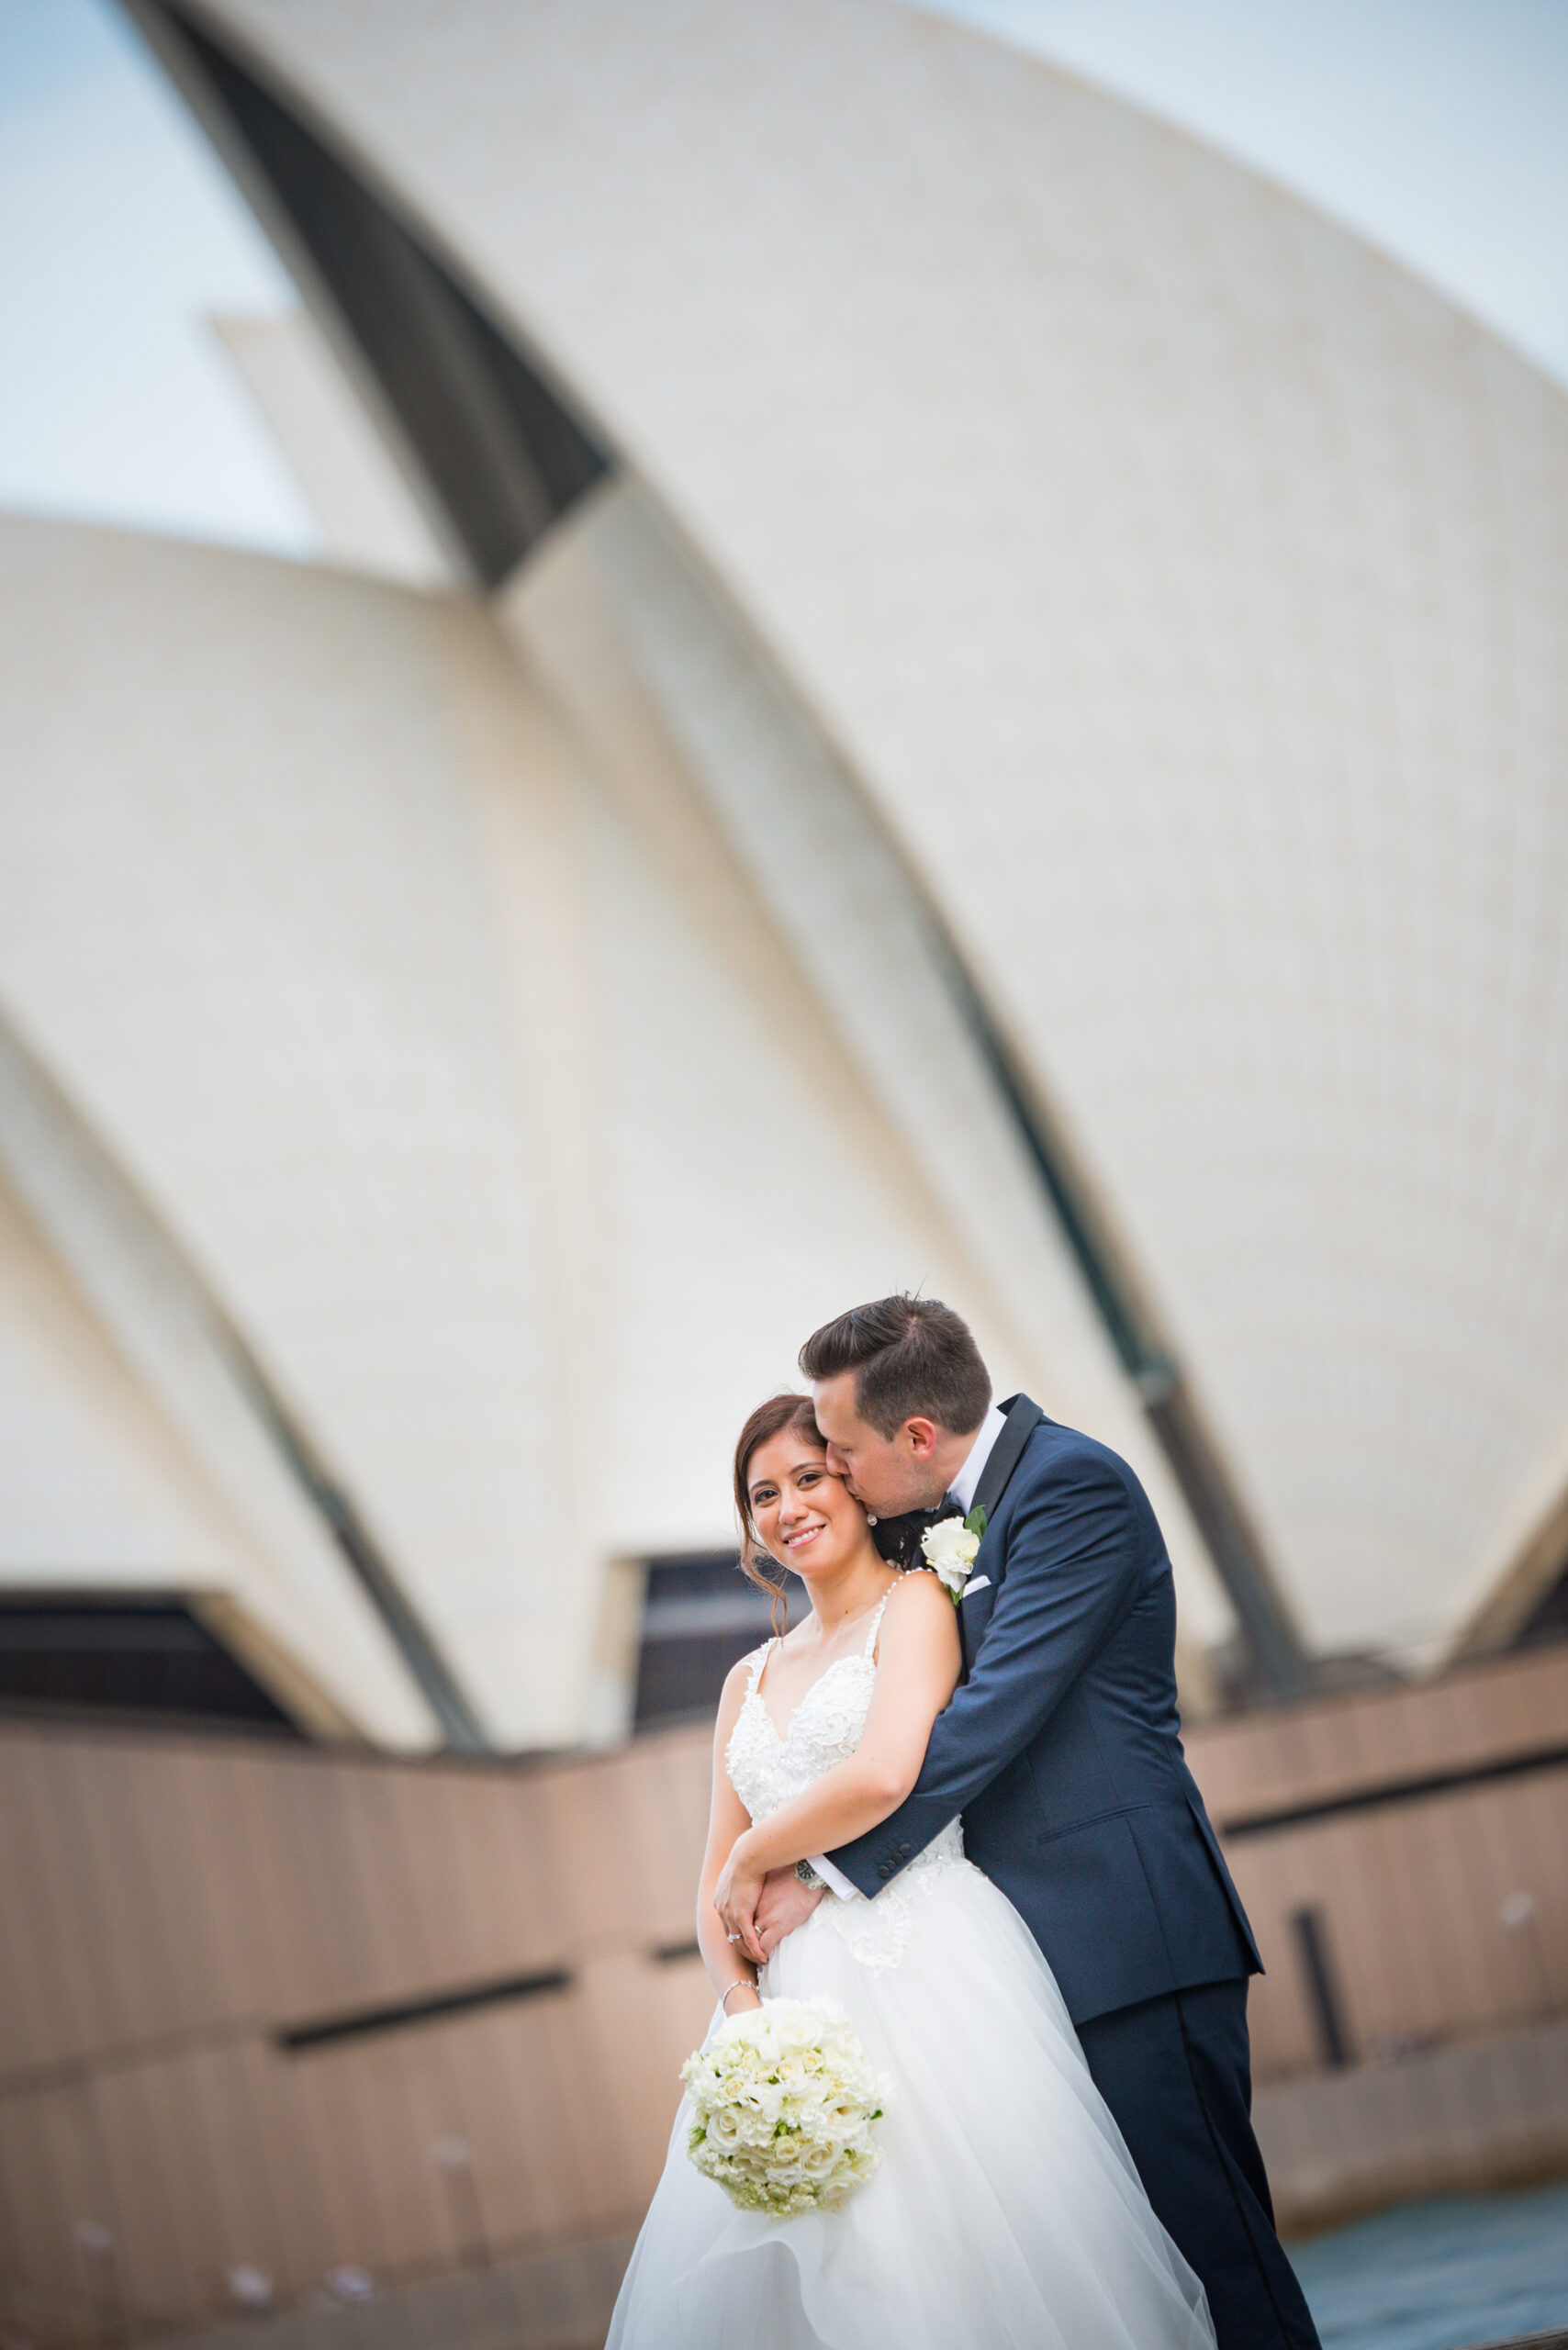 Michelle_Tom_Romantic-Sydney-Wedding_Passion-Creations_Glenn-Duffus-Photography_023